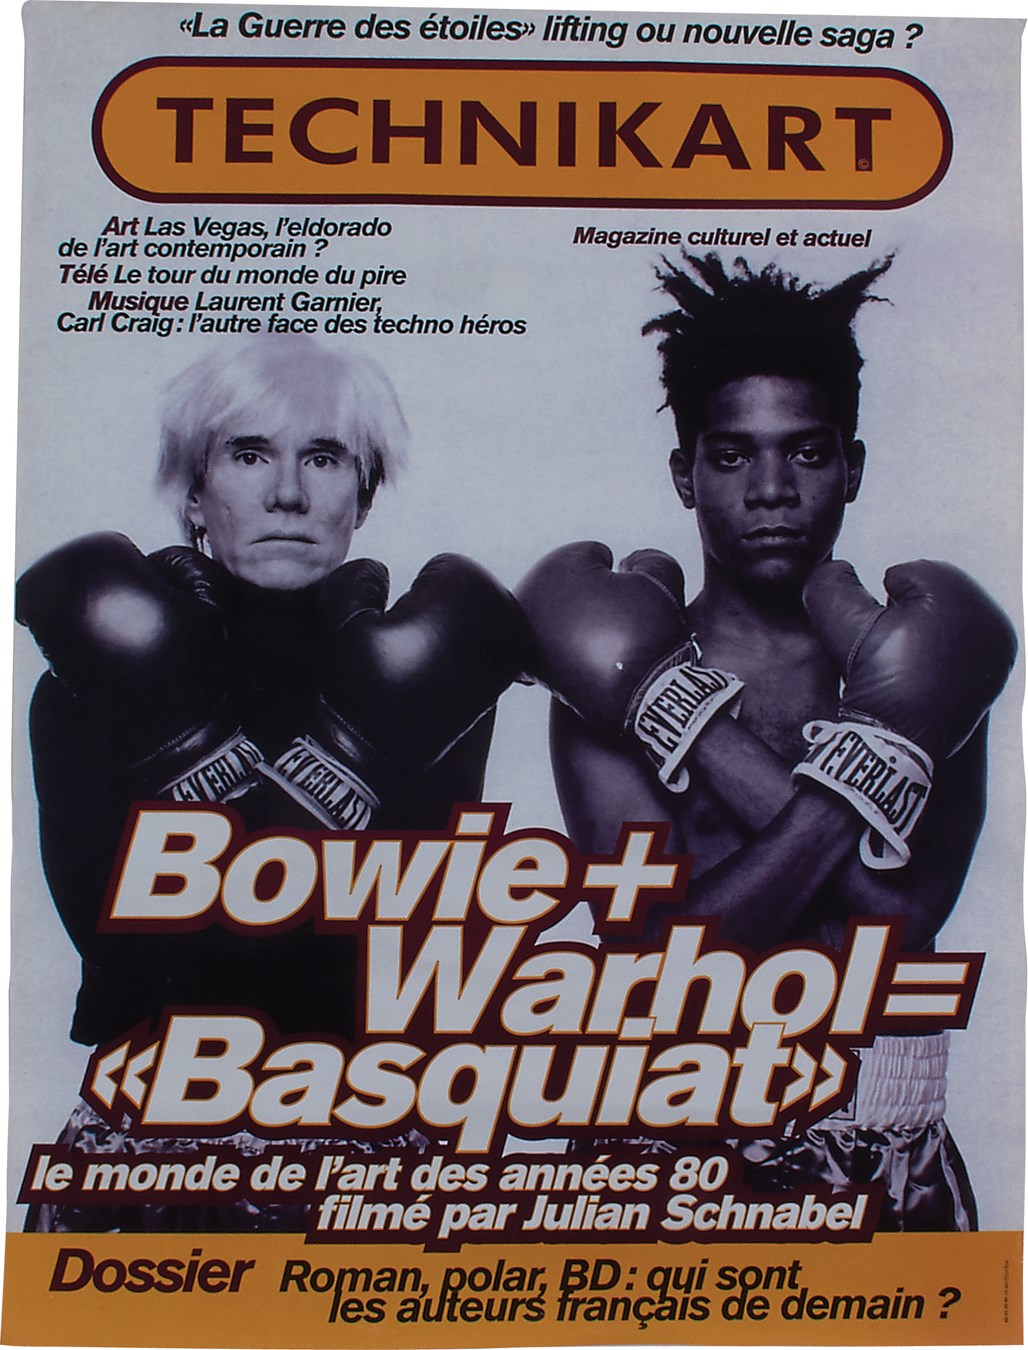 1996 Andy Warhol vs. John-Claude Basquiat Exhibition Poster